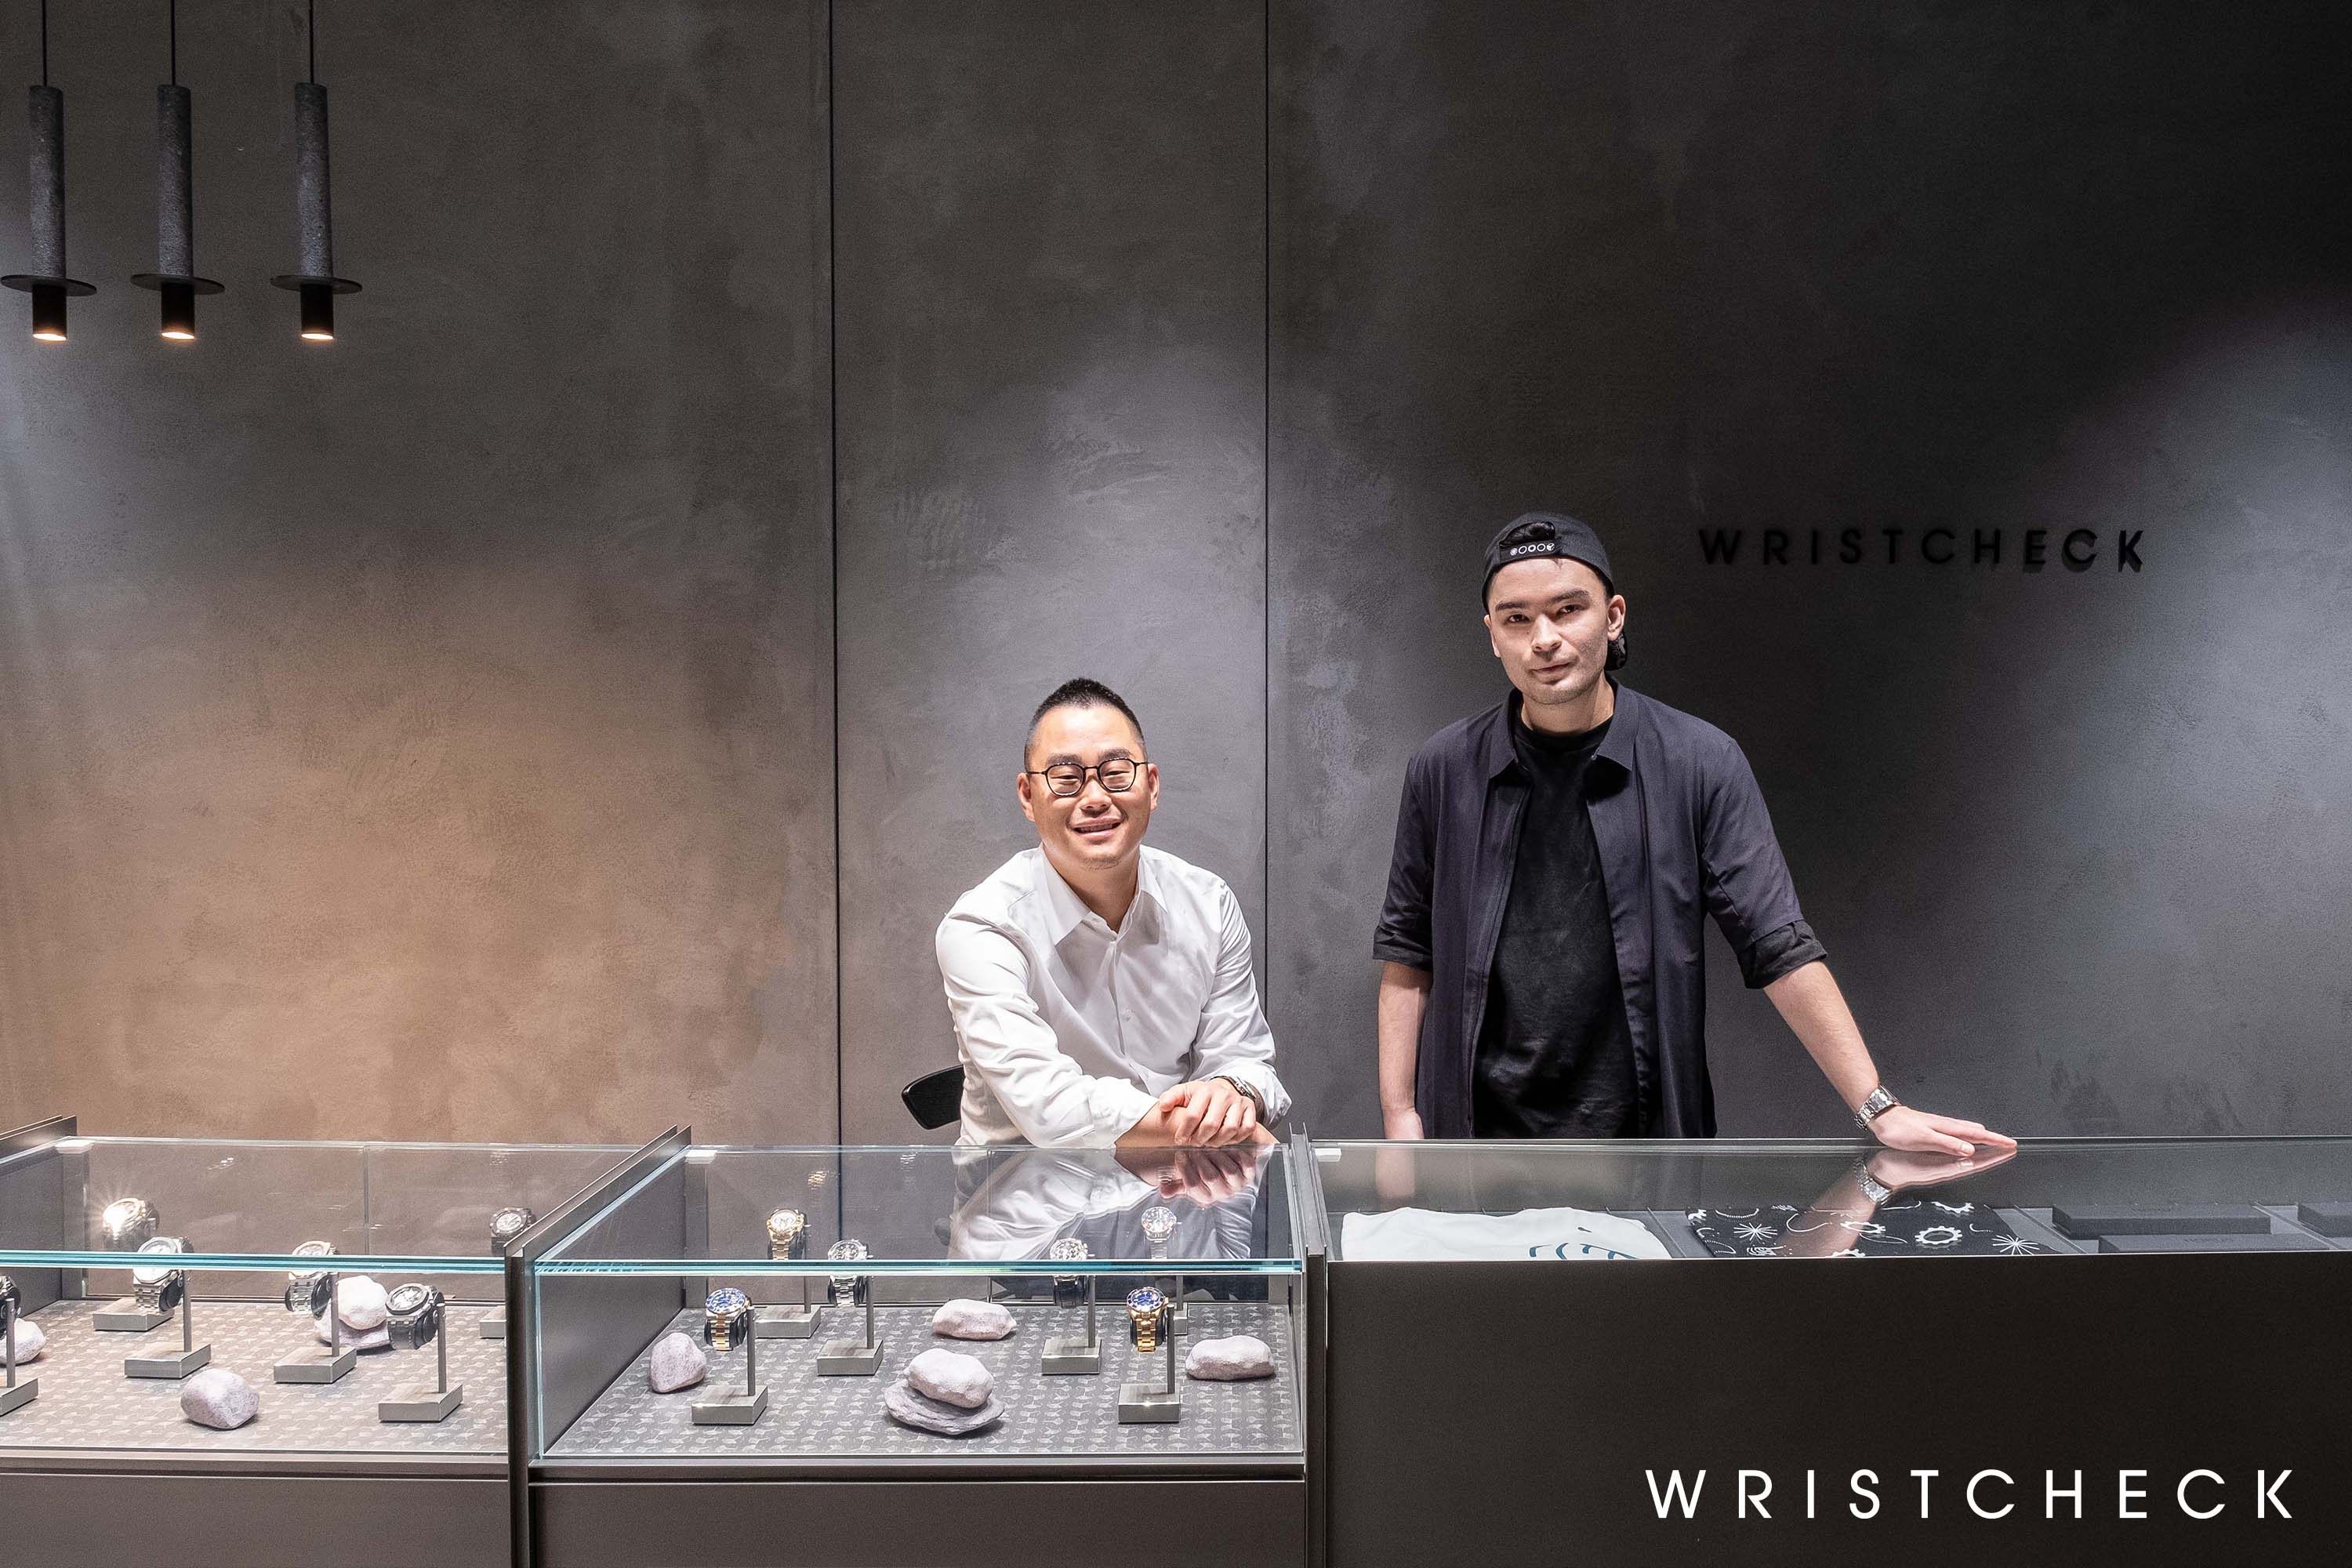 WristCheck co-founders Sean Wong and Austen Chu